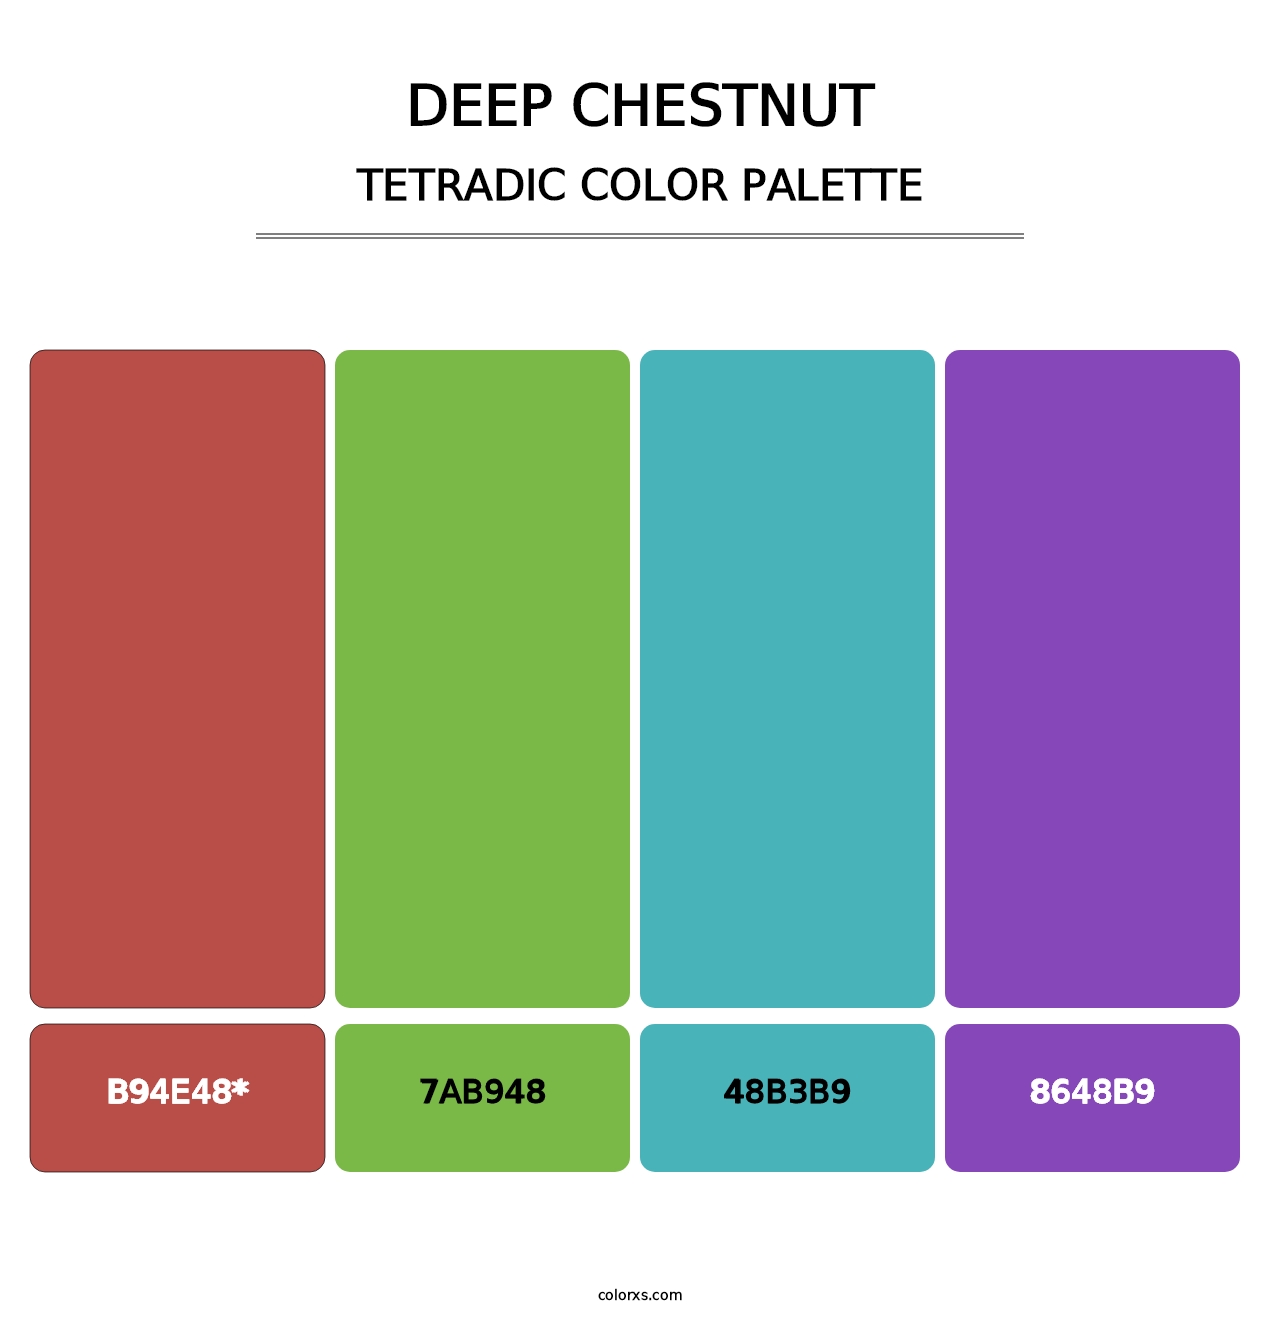 Deep Chestnut - Tetradic Color Palette